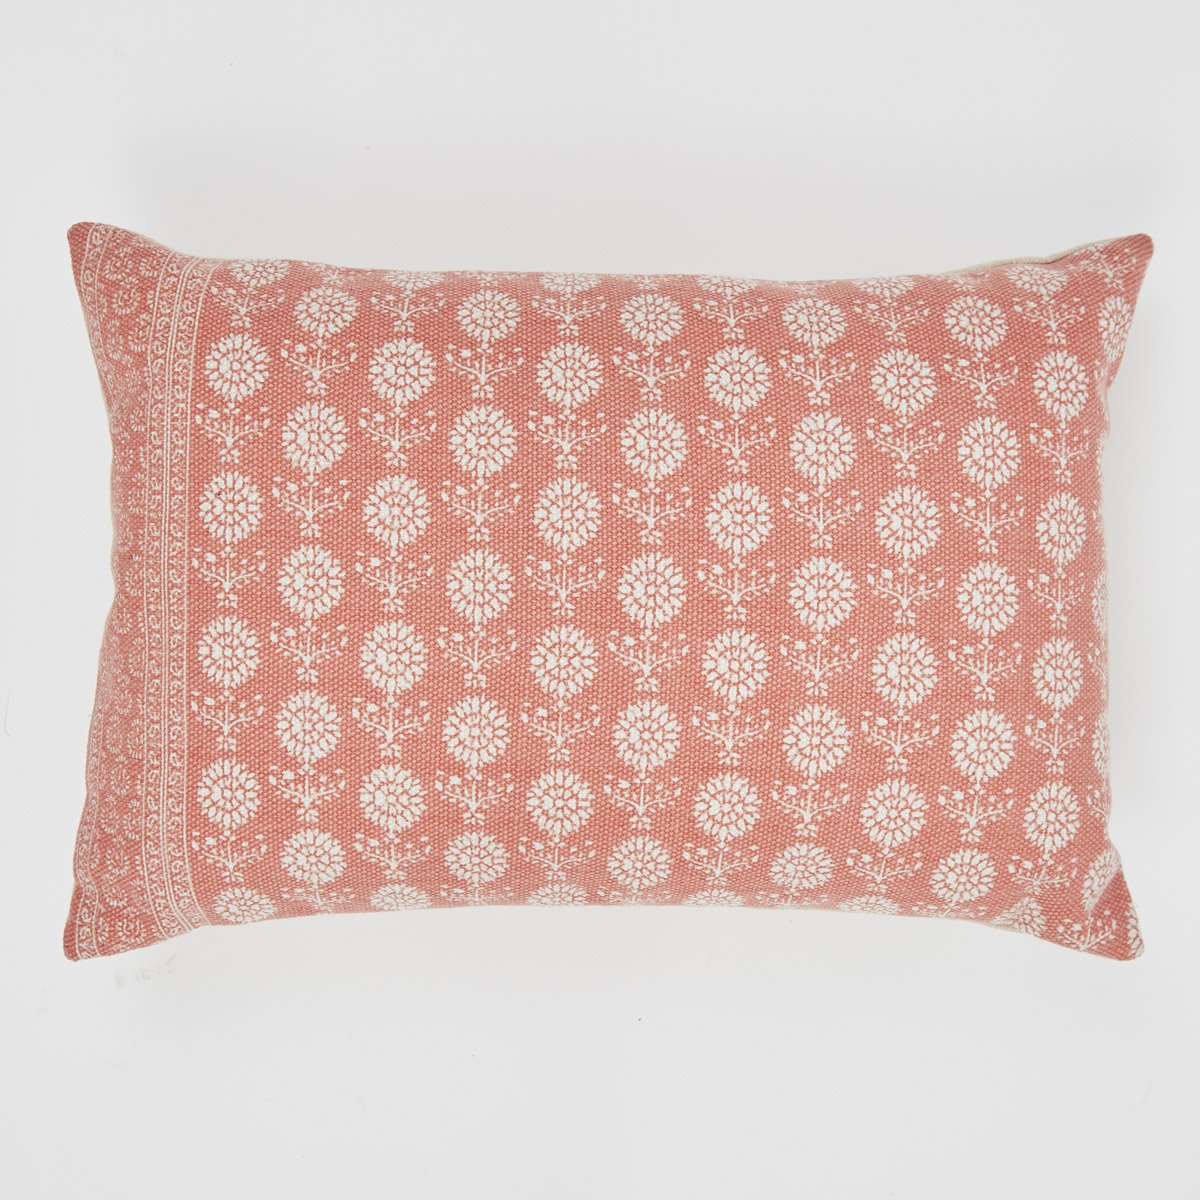 Jaipur Marigold Coral Cushion